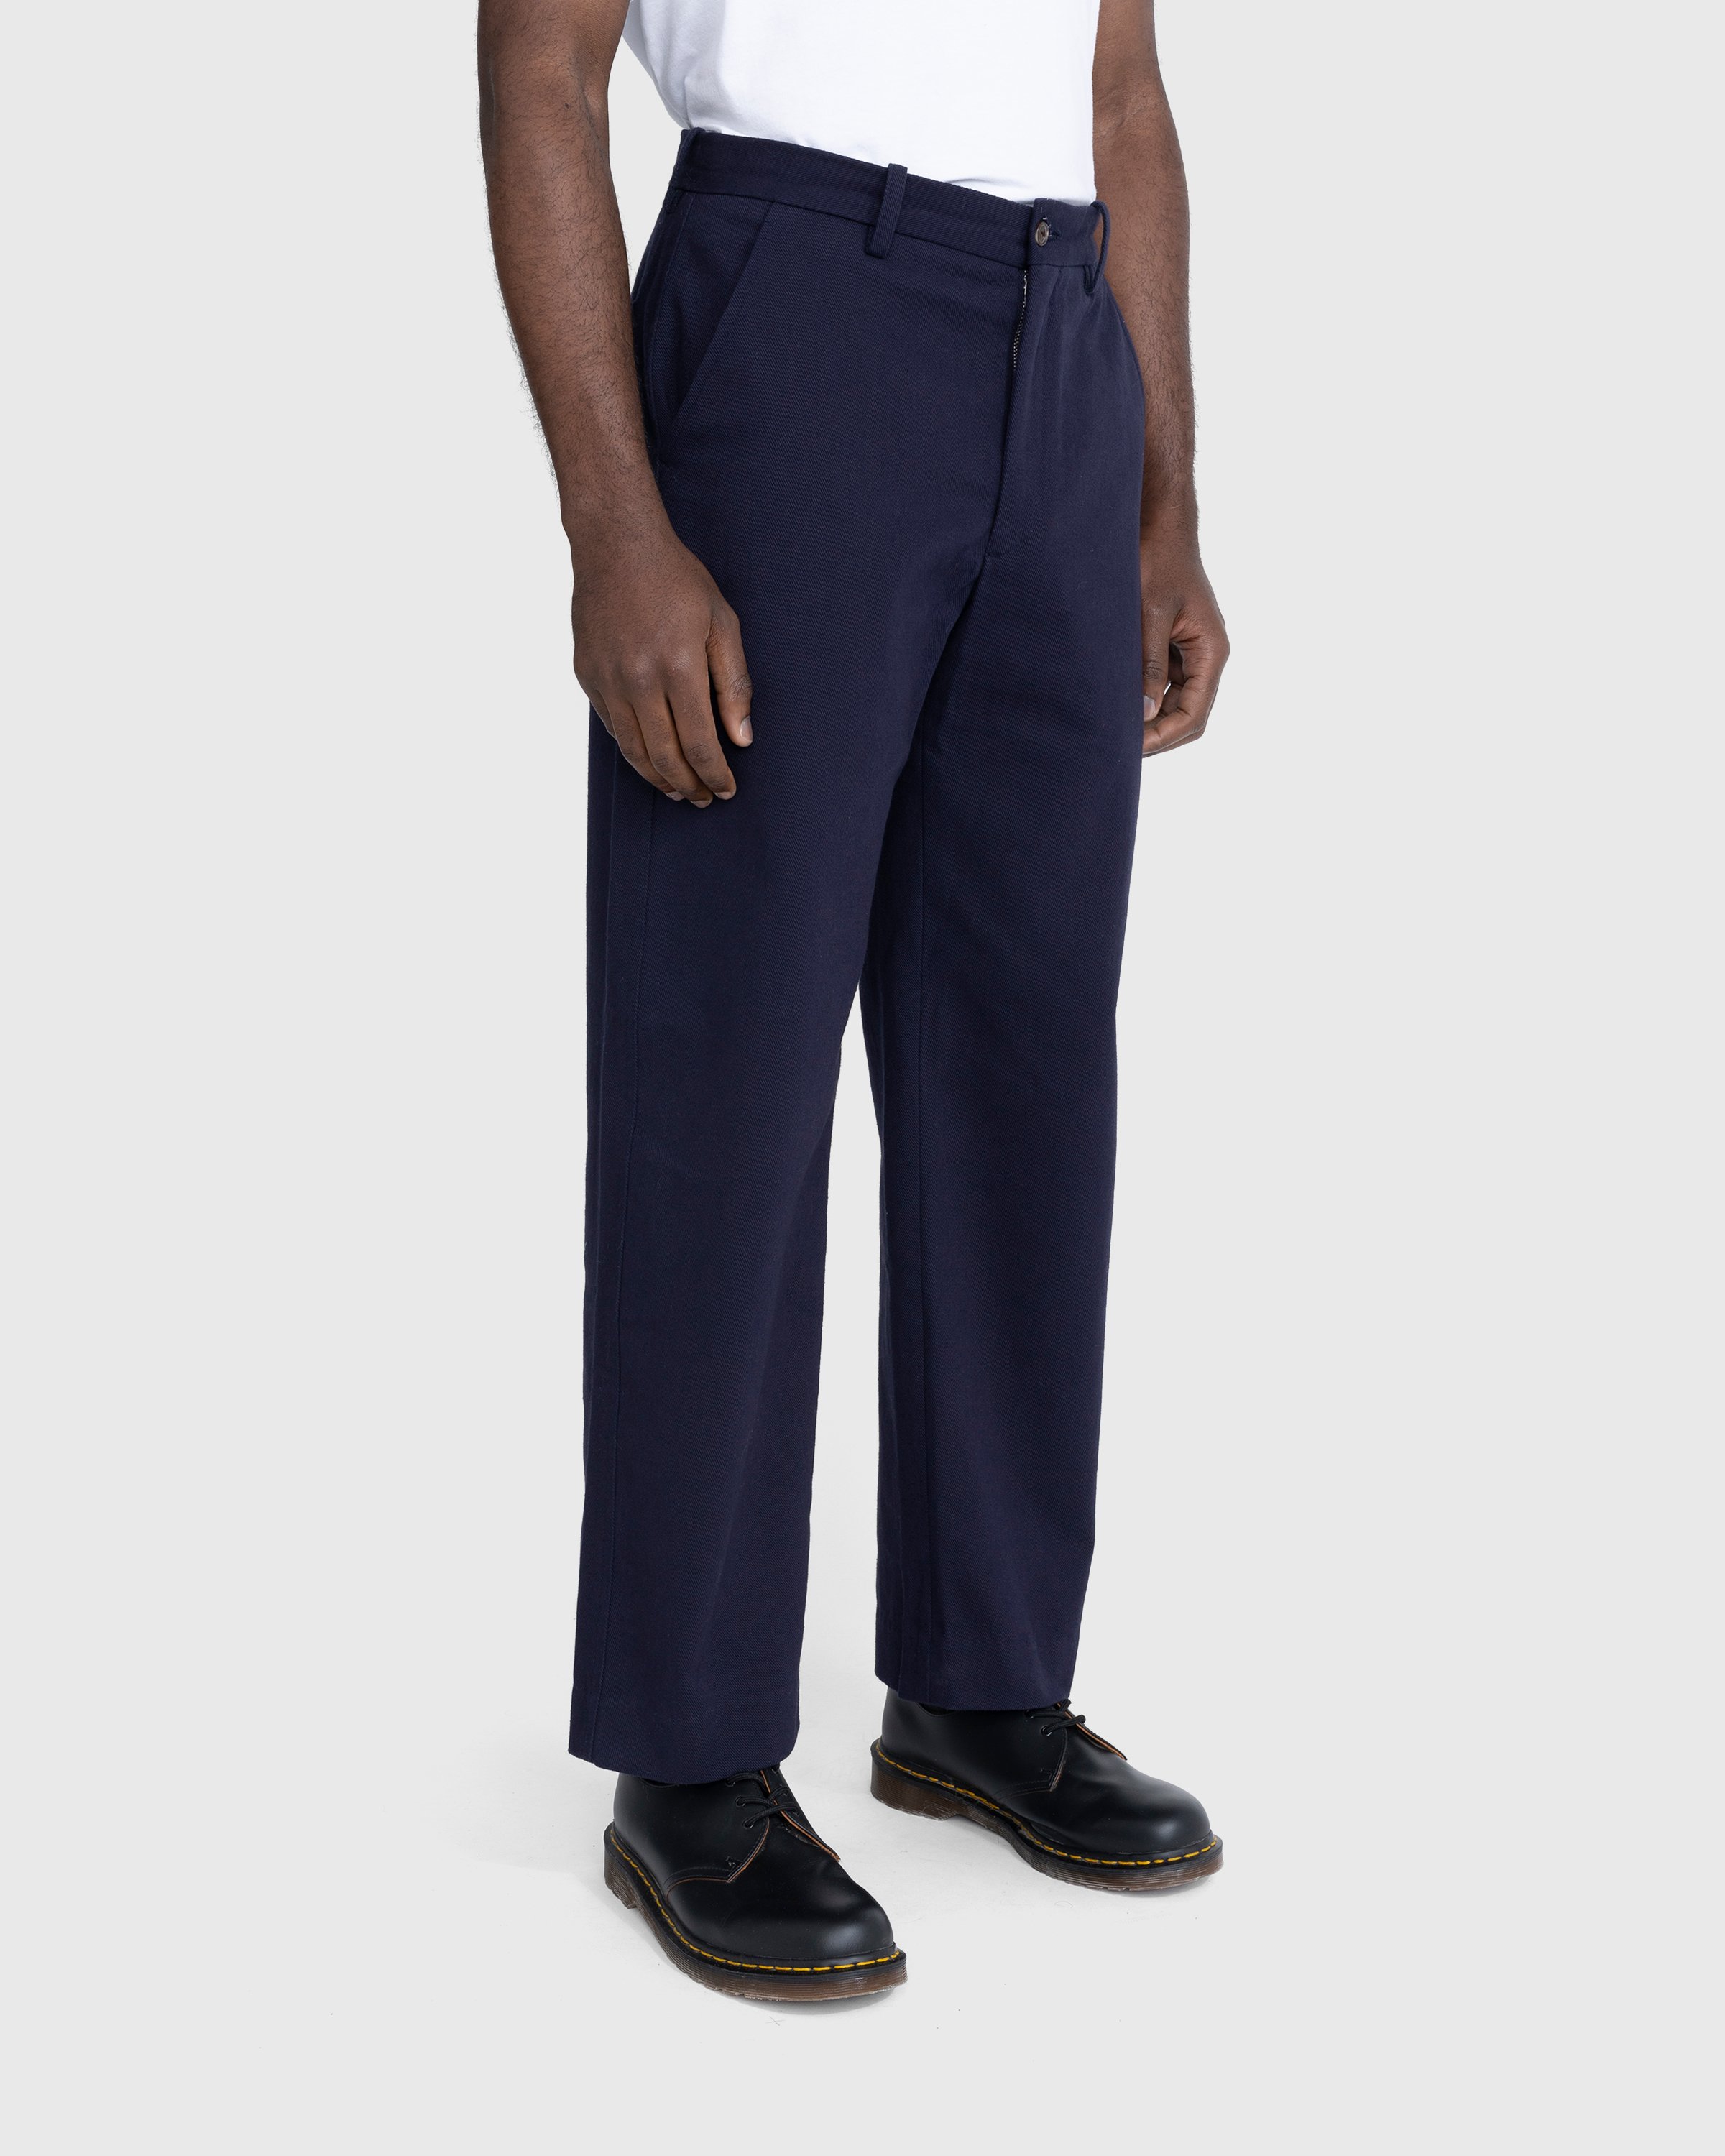 Bode - Standard Trouser Blue - Clothing - Blue - Image 3